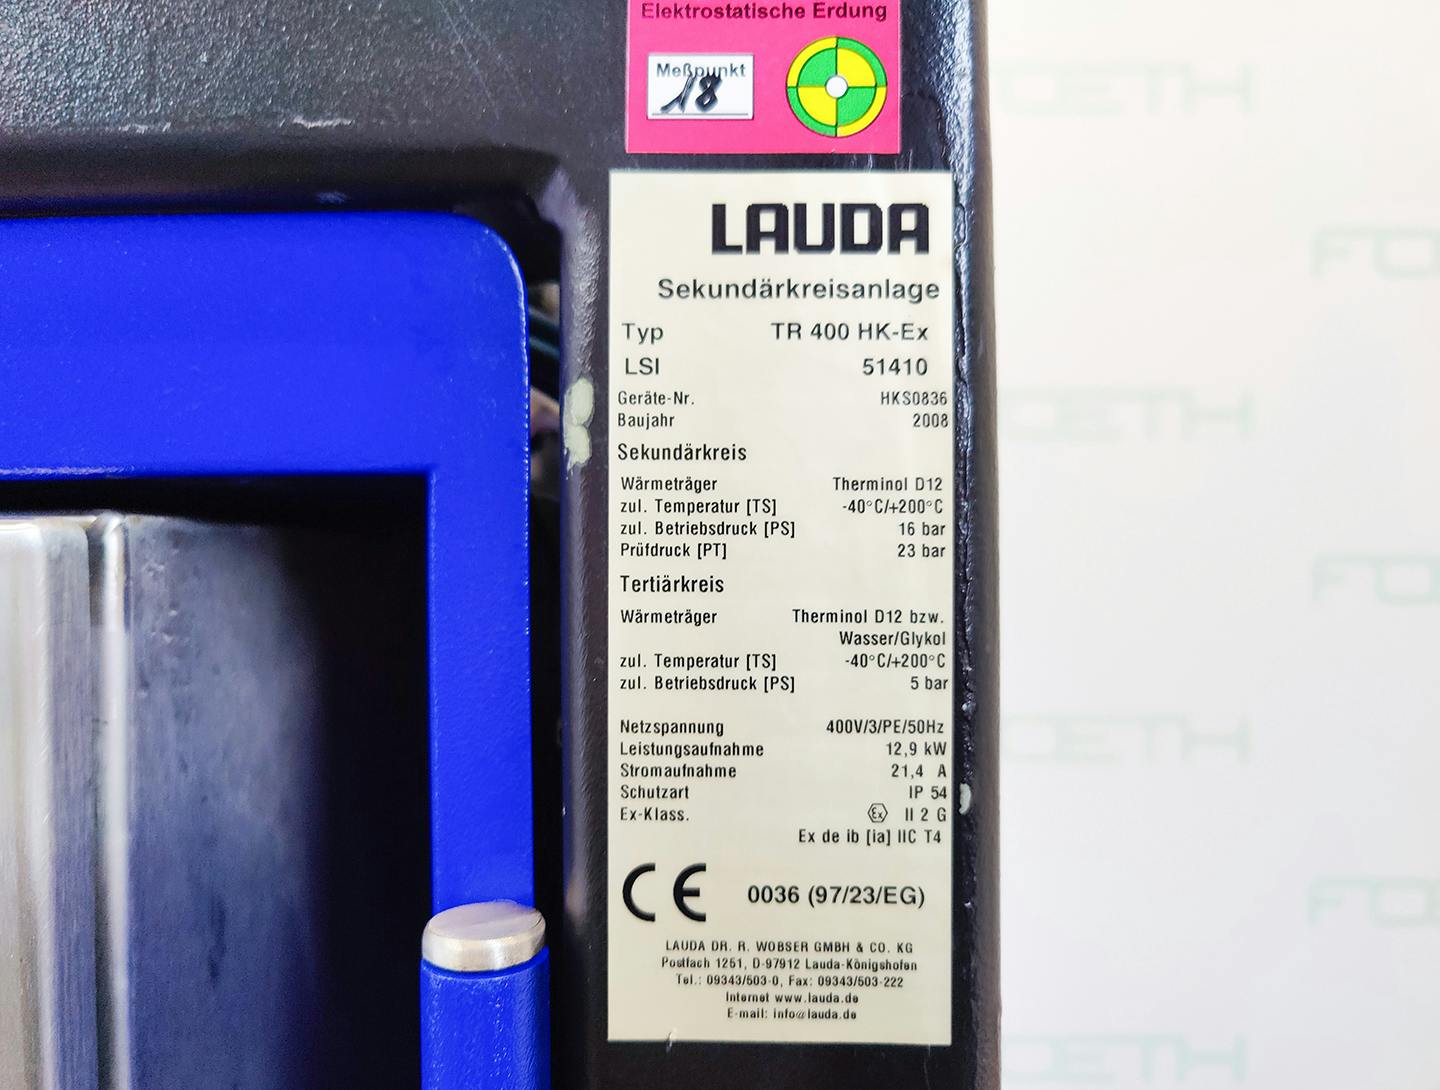 Lauda TR400 HK-EX "secondary circuit system" - Chladic recirkulacní - image 7